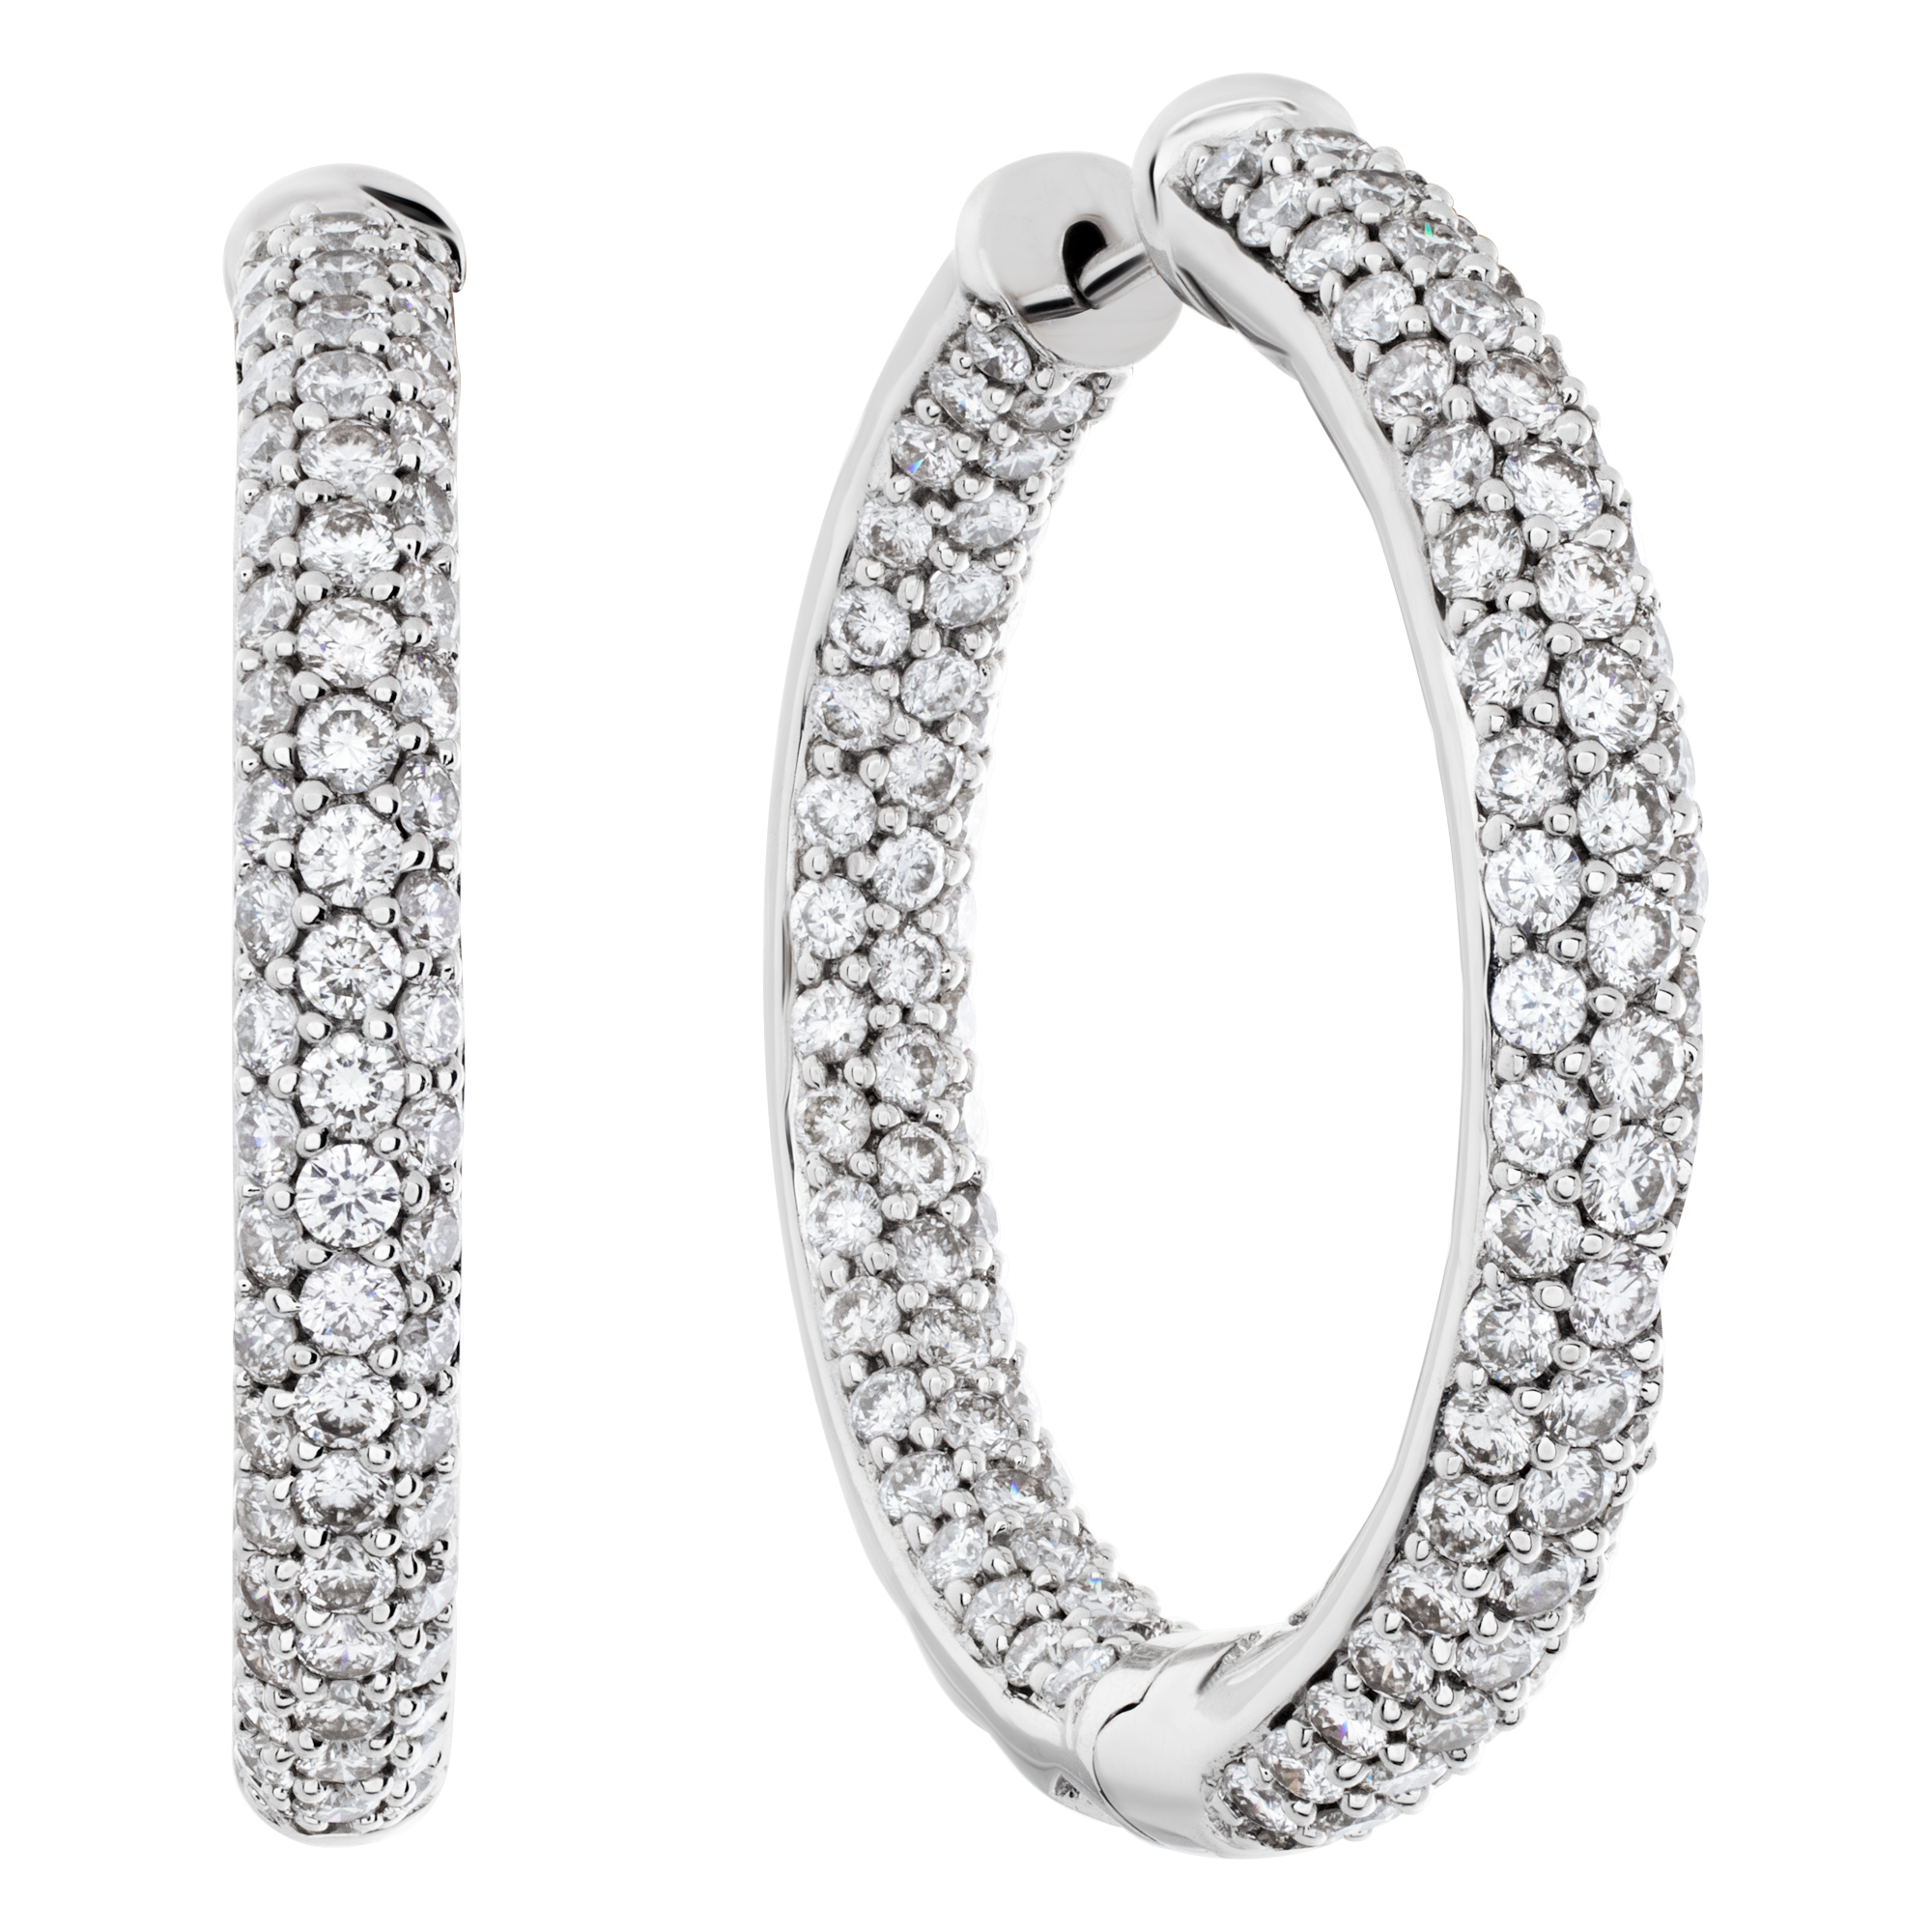 Diamond hoop earrings in 18k white gold